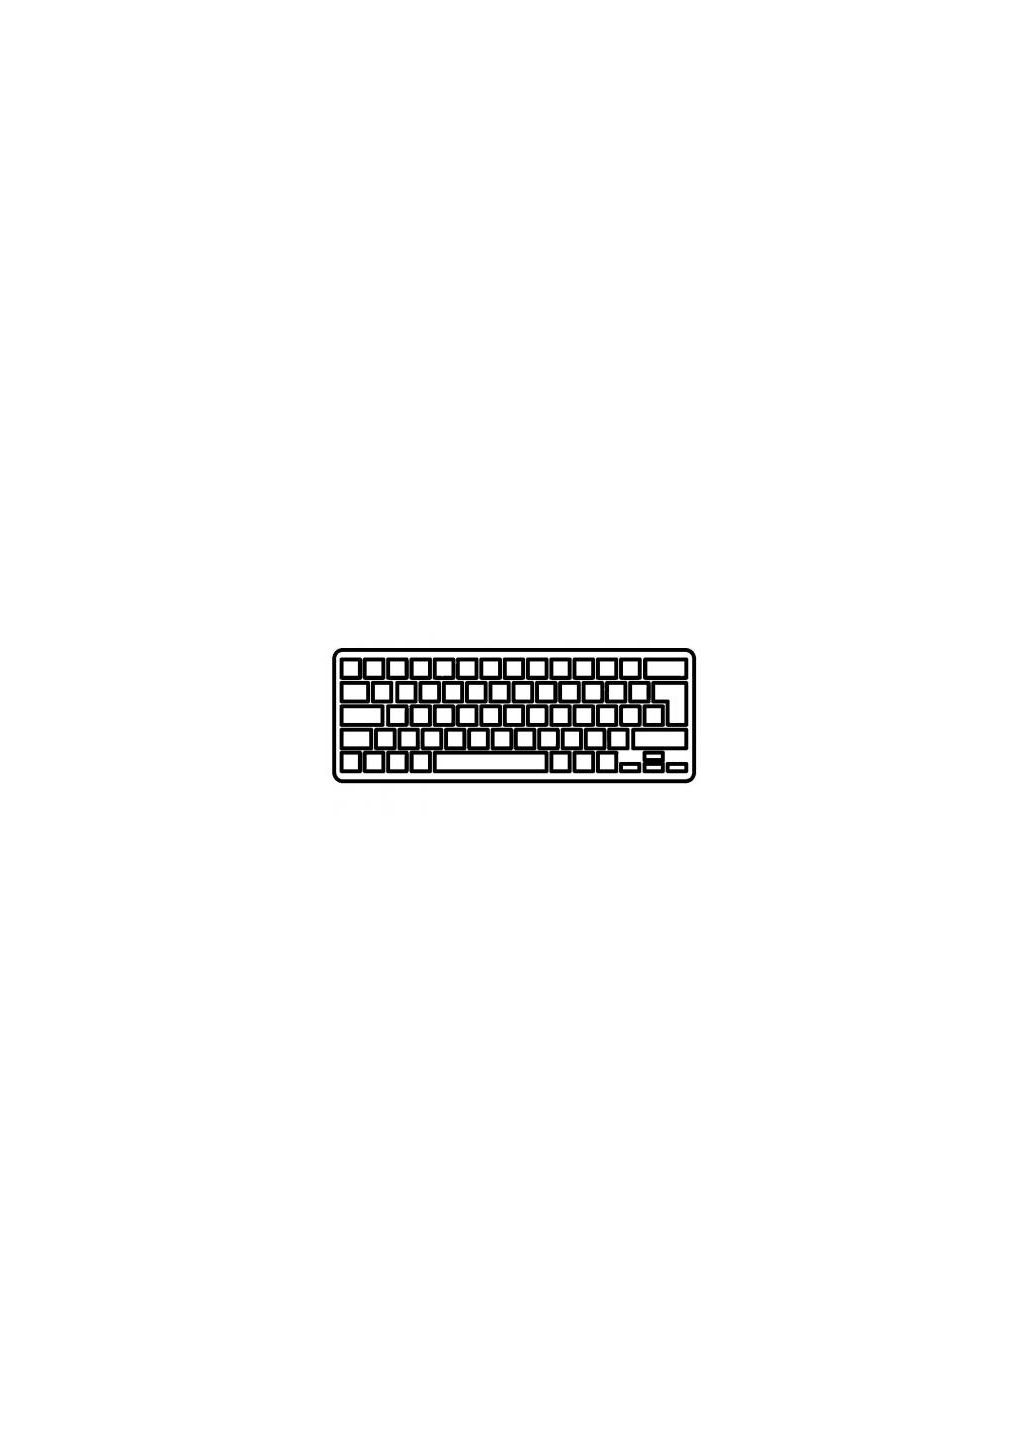 Клавиатура ноутбука Pavilion dv2/dv21000 черная UA (A43041) HP pavilion dv2/dv2-1000 черная ua (276706765)